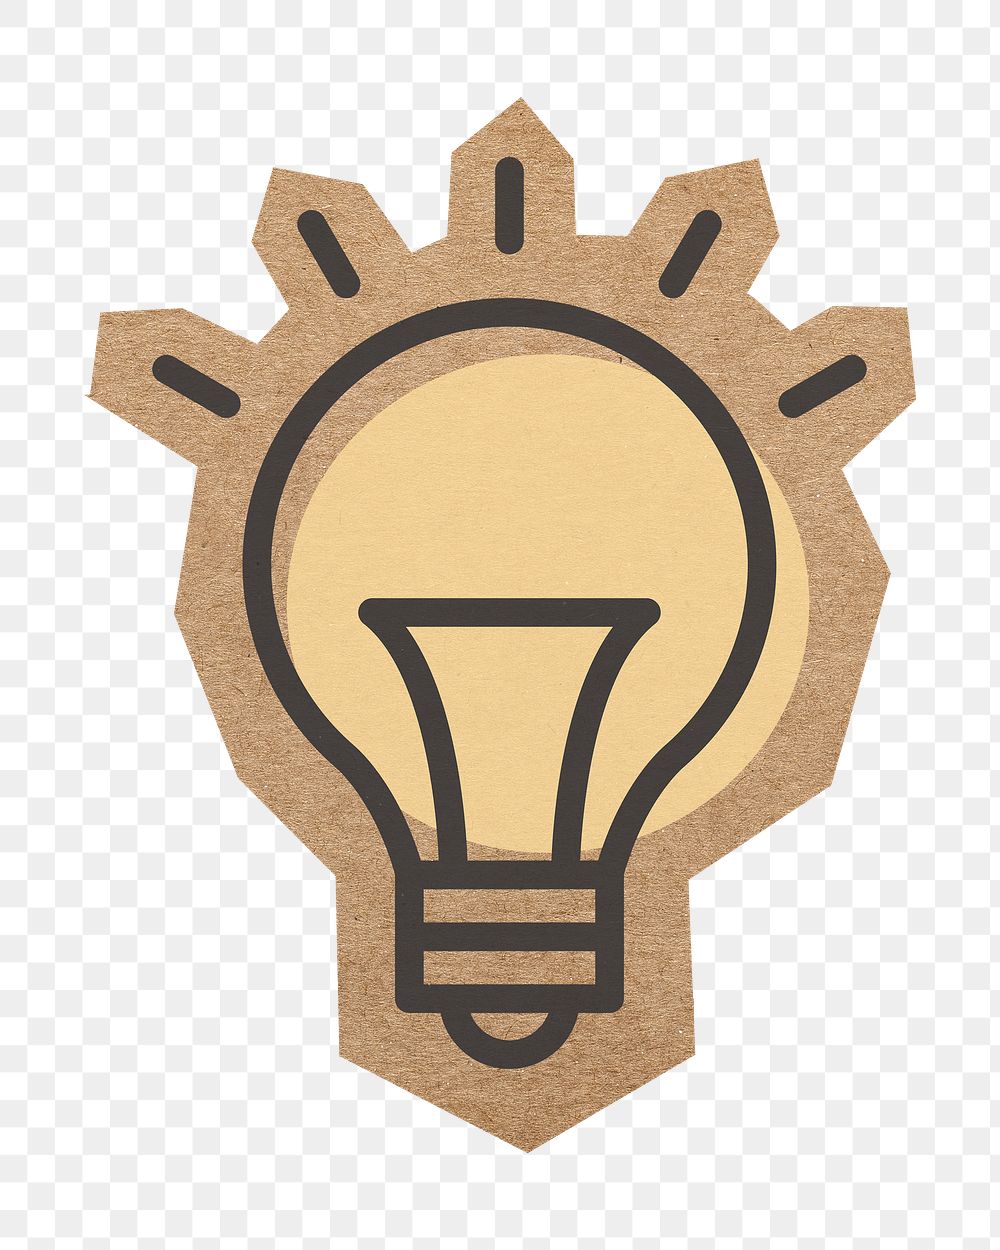 Light bulb icon png, cut out paper element, transparent background